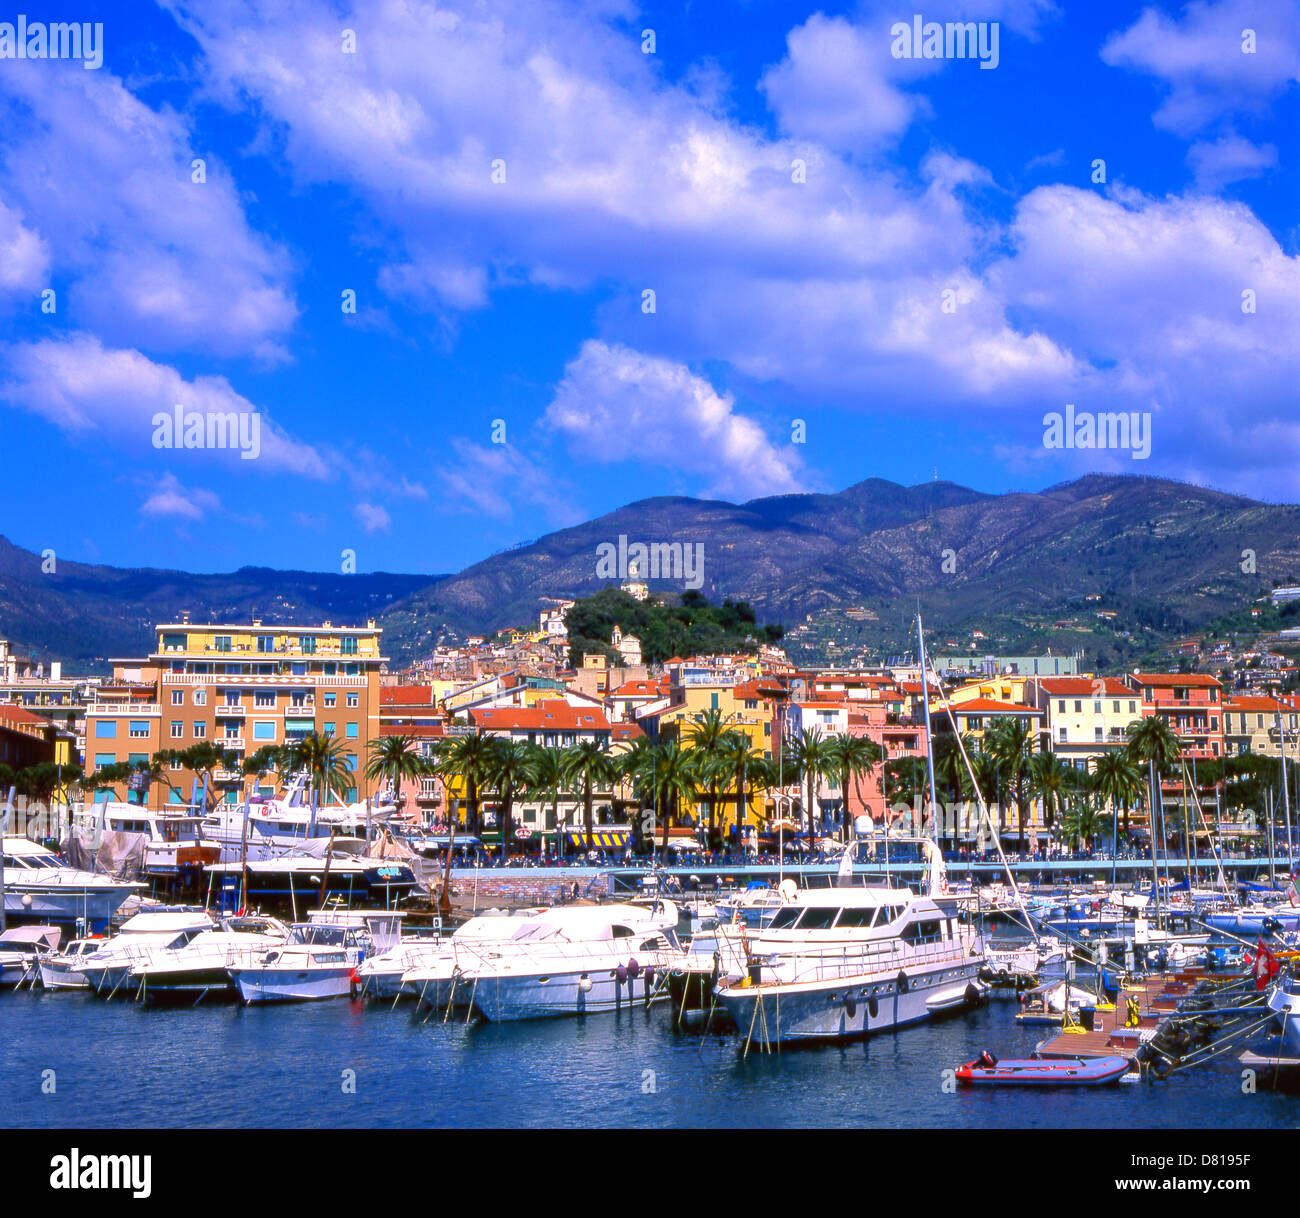 Puerto de San Remo (Porto Vecchio di San Remo) de San Remo, Liguria, Italia Foto de stock